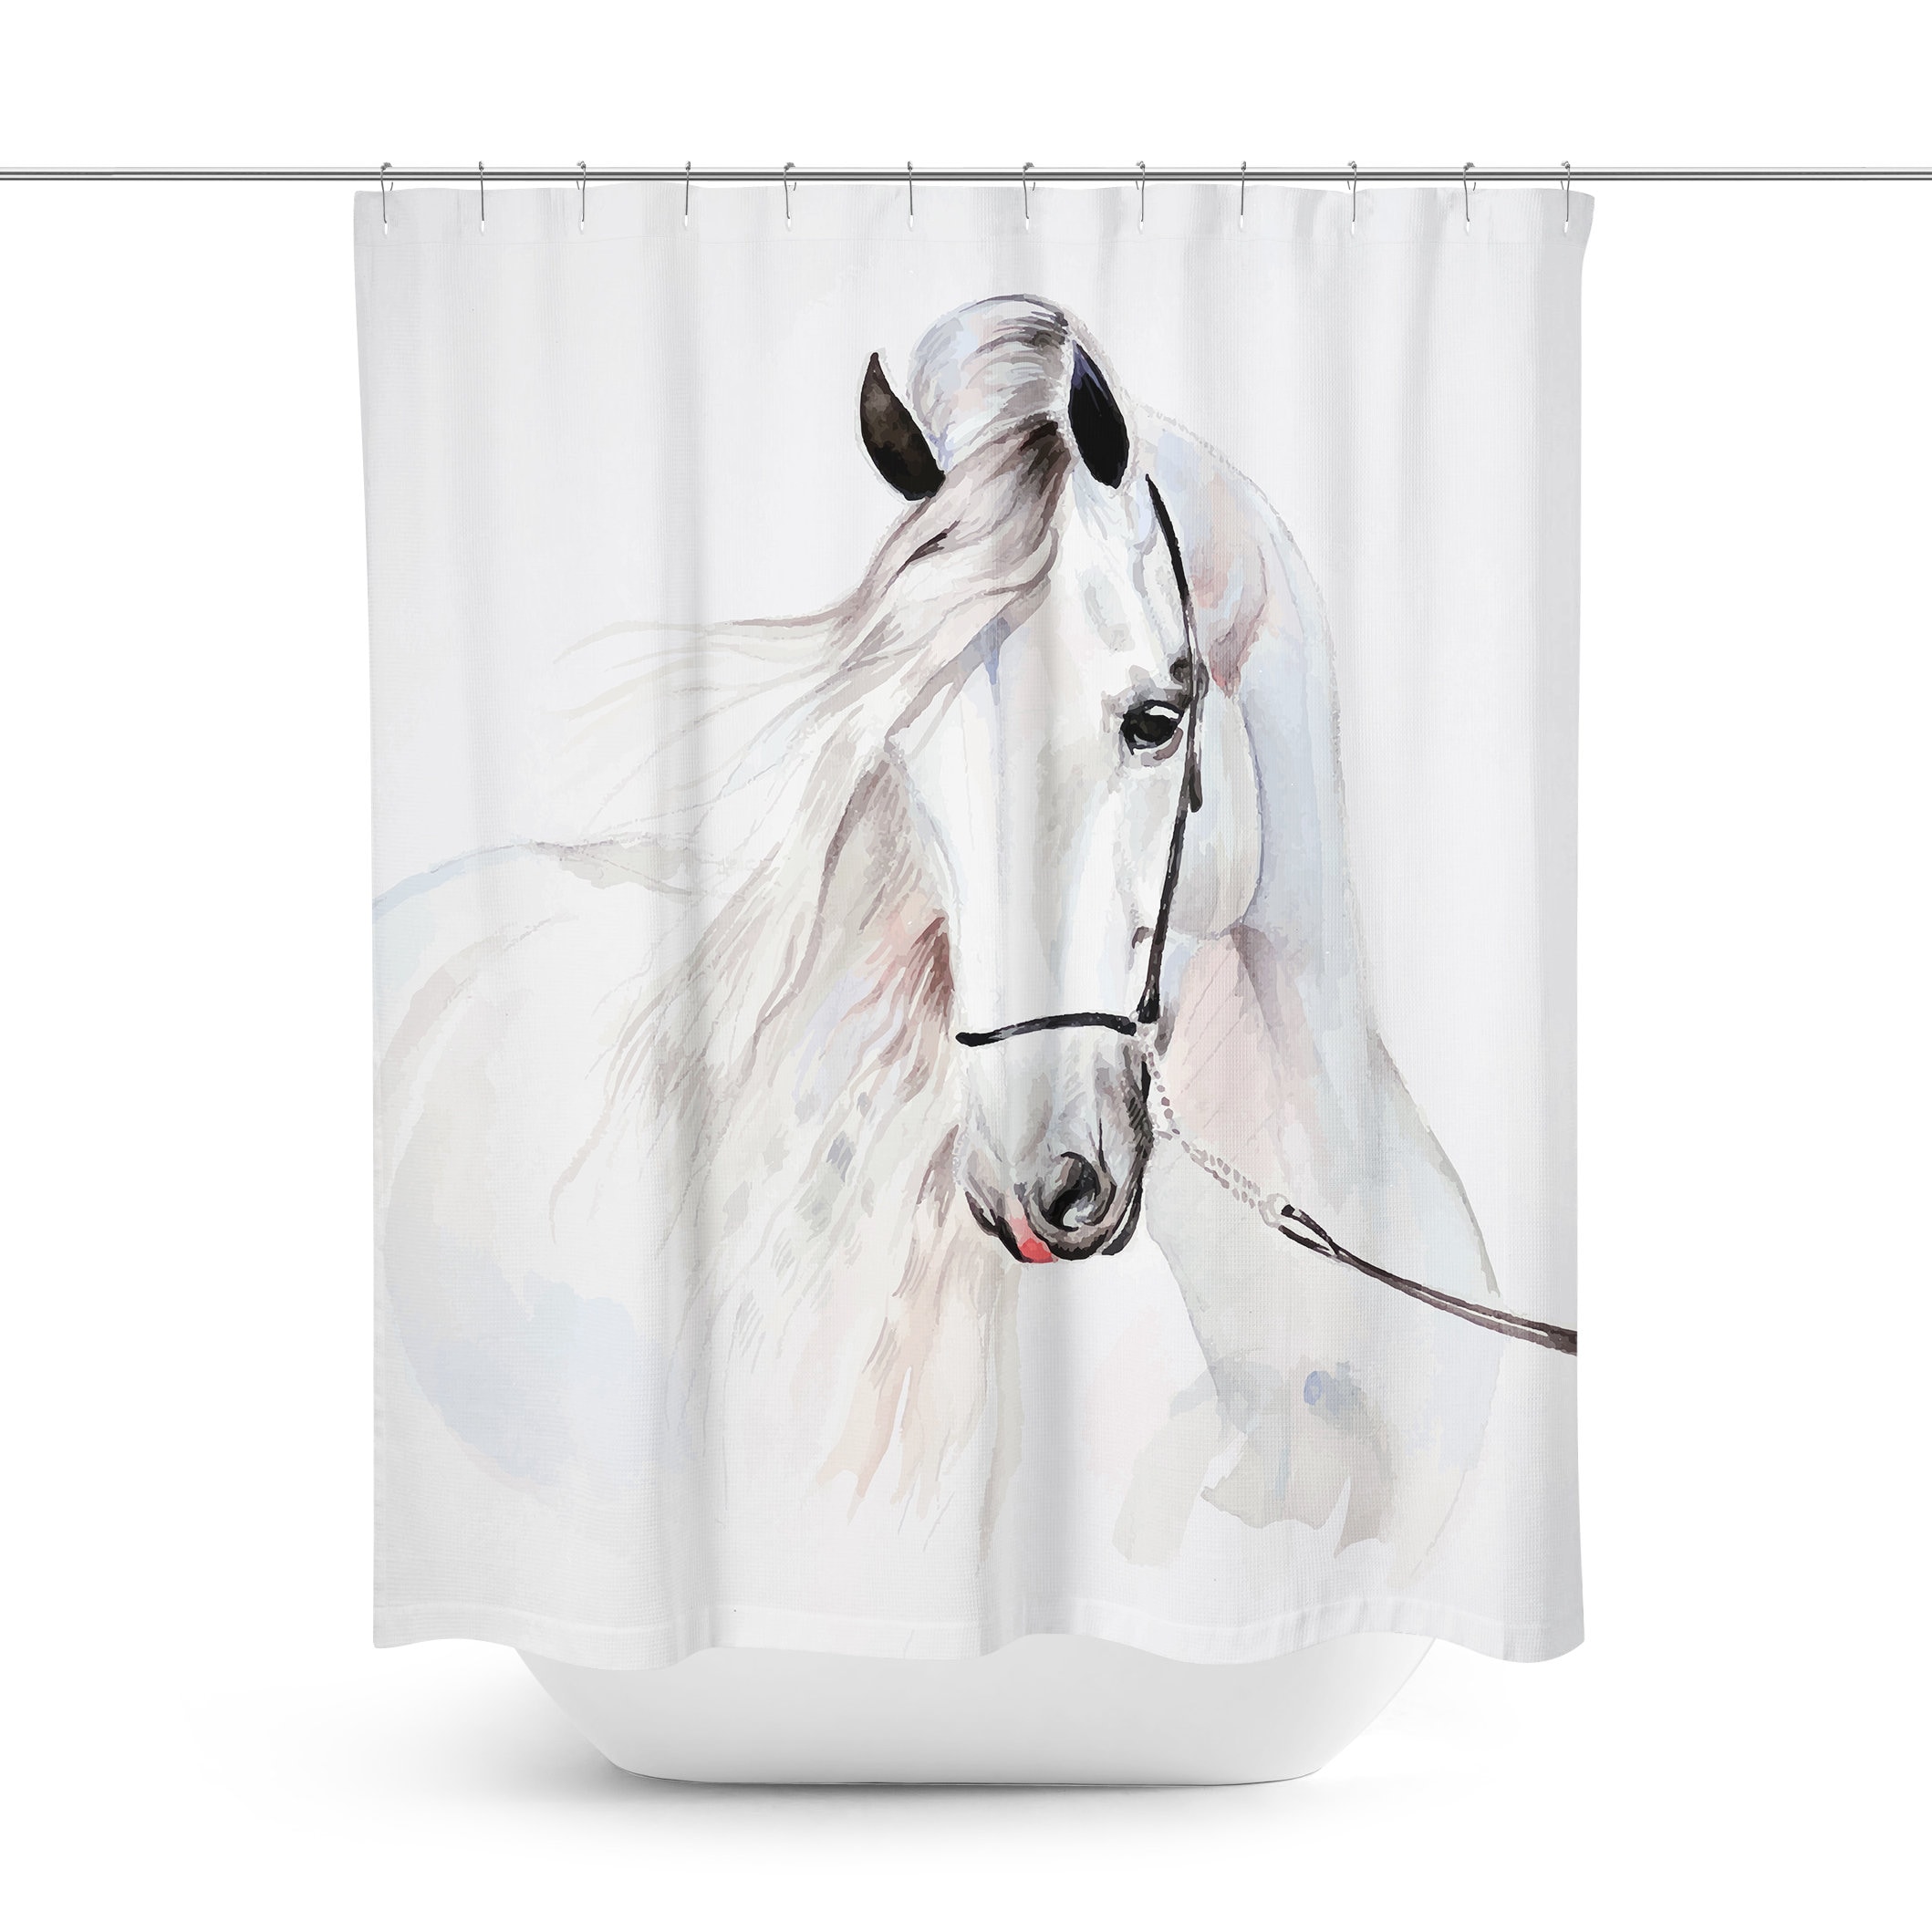 Horse Couple Portrait Shower Curtain Set Waterproof Fabric Decor Curtains& Hooks